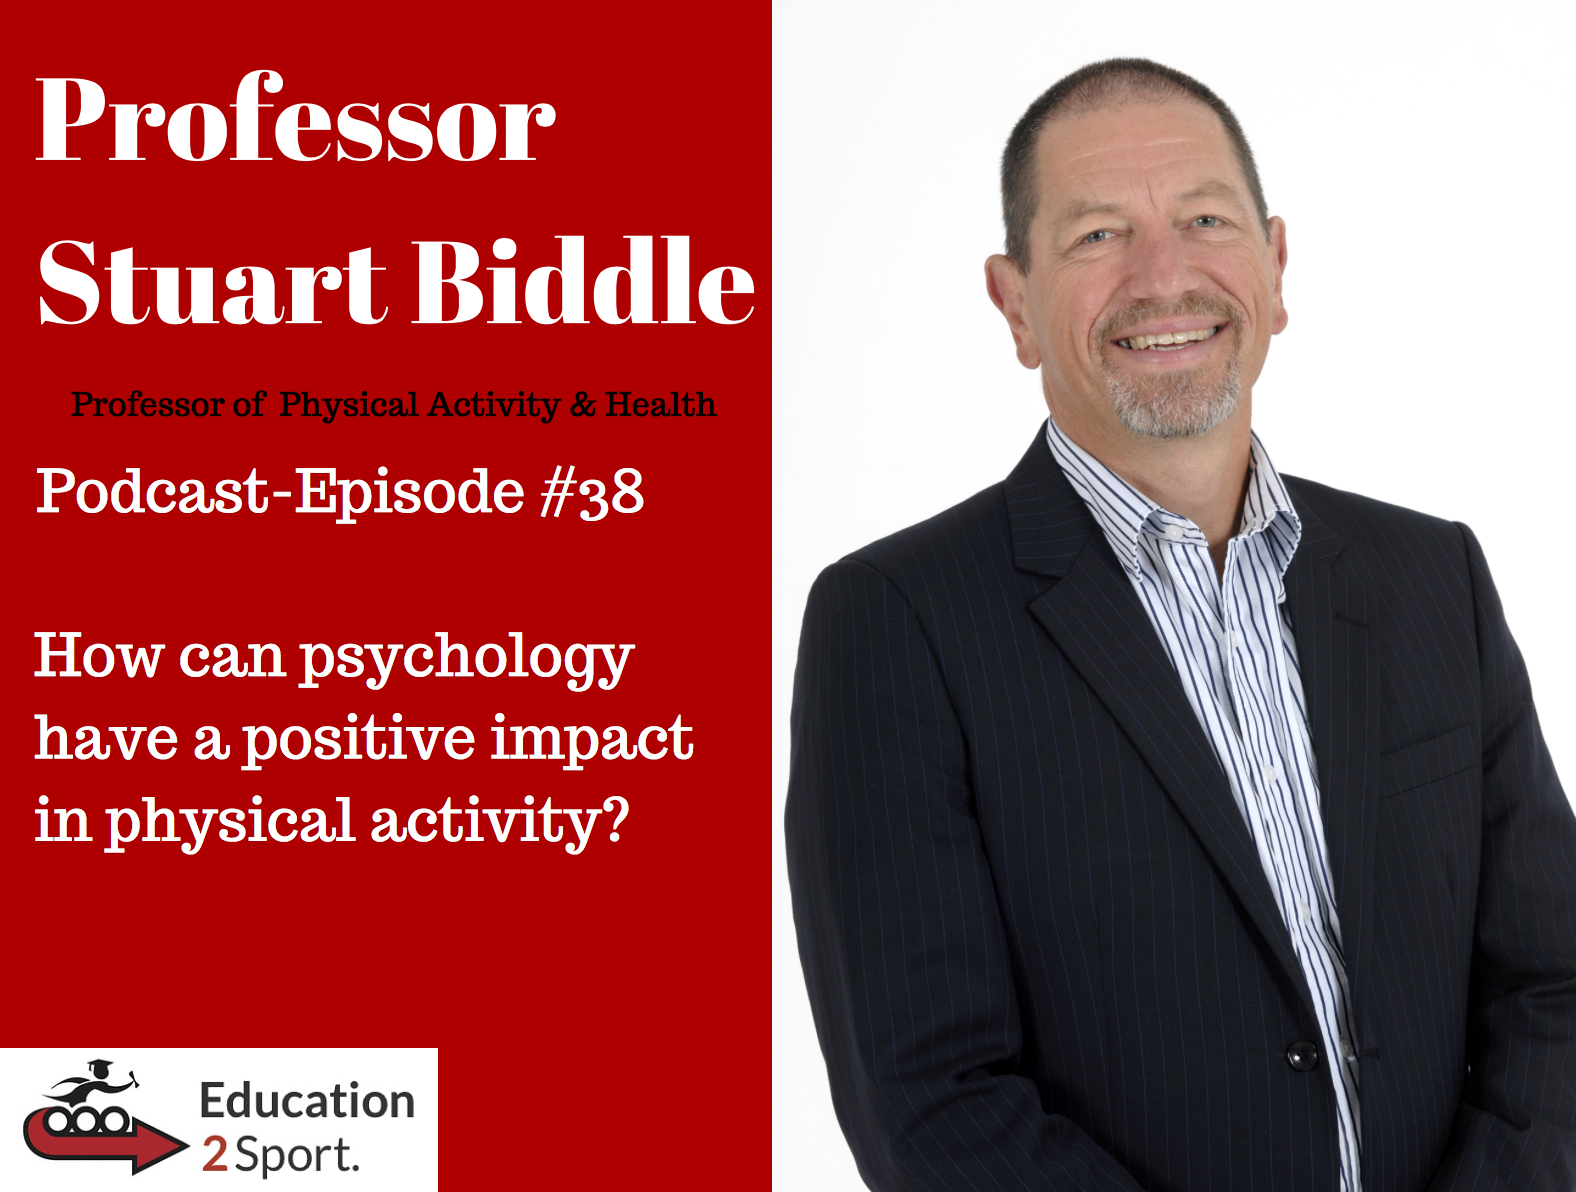 Professor Stuart Biddle